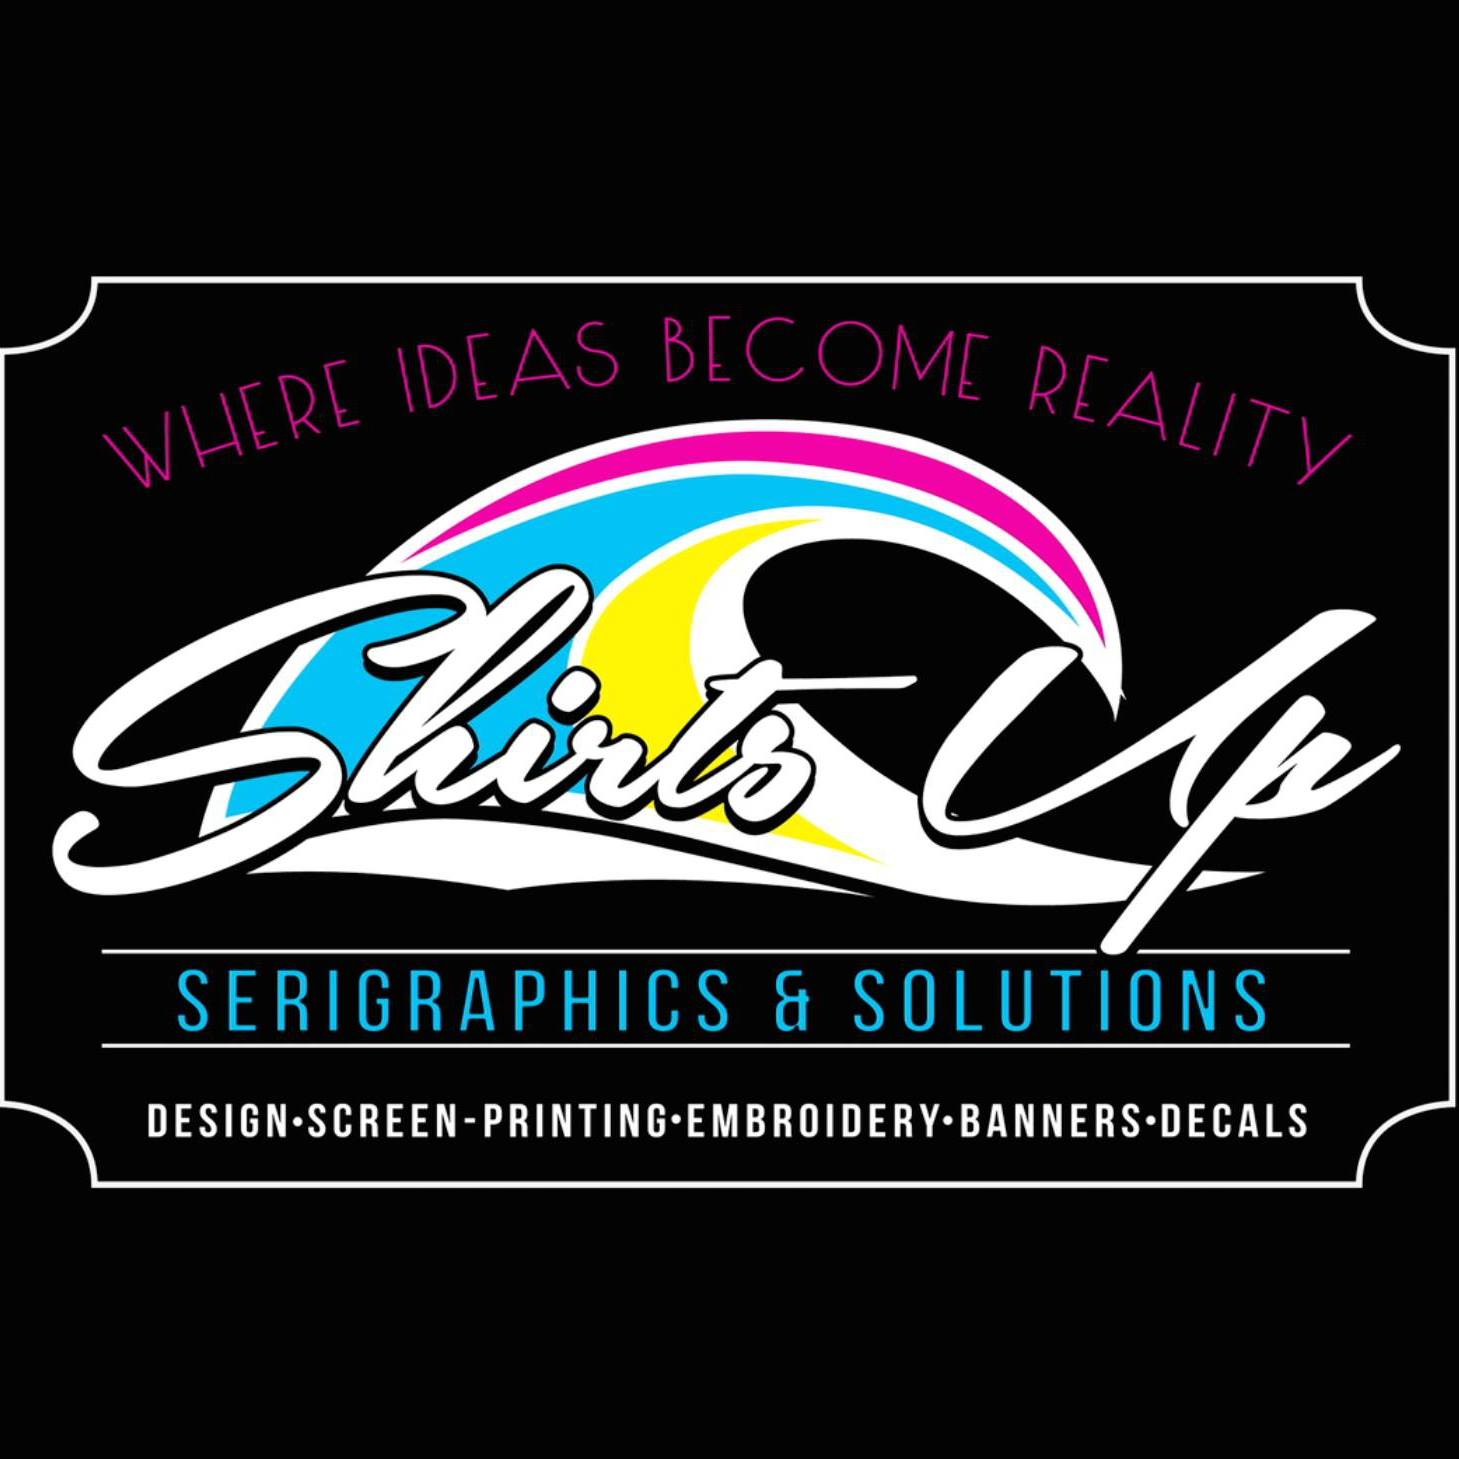 Company logo of Shirts Up Serigraphics & Solutions